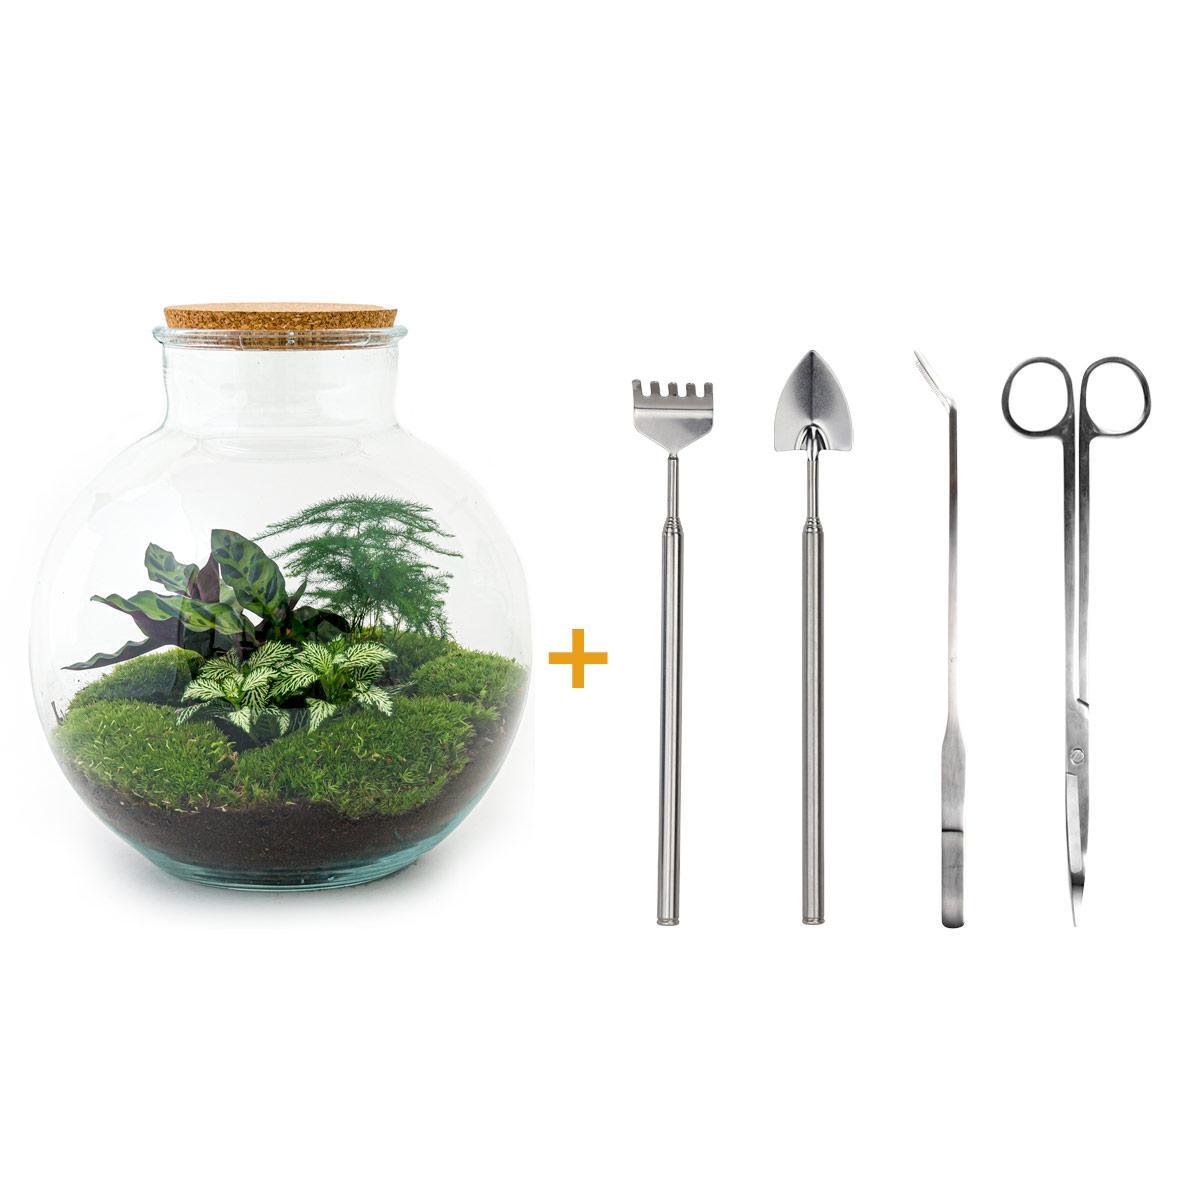 DIY terrarium - Bolder Bob - ↑ 30 cm + Rake + Shovel + Tweezer + Scissors